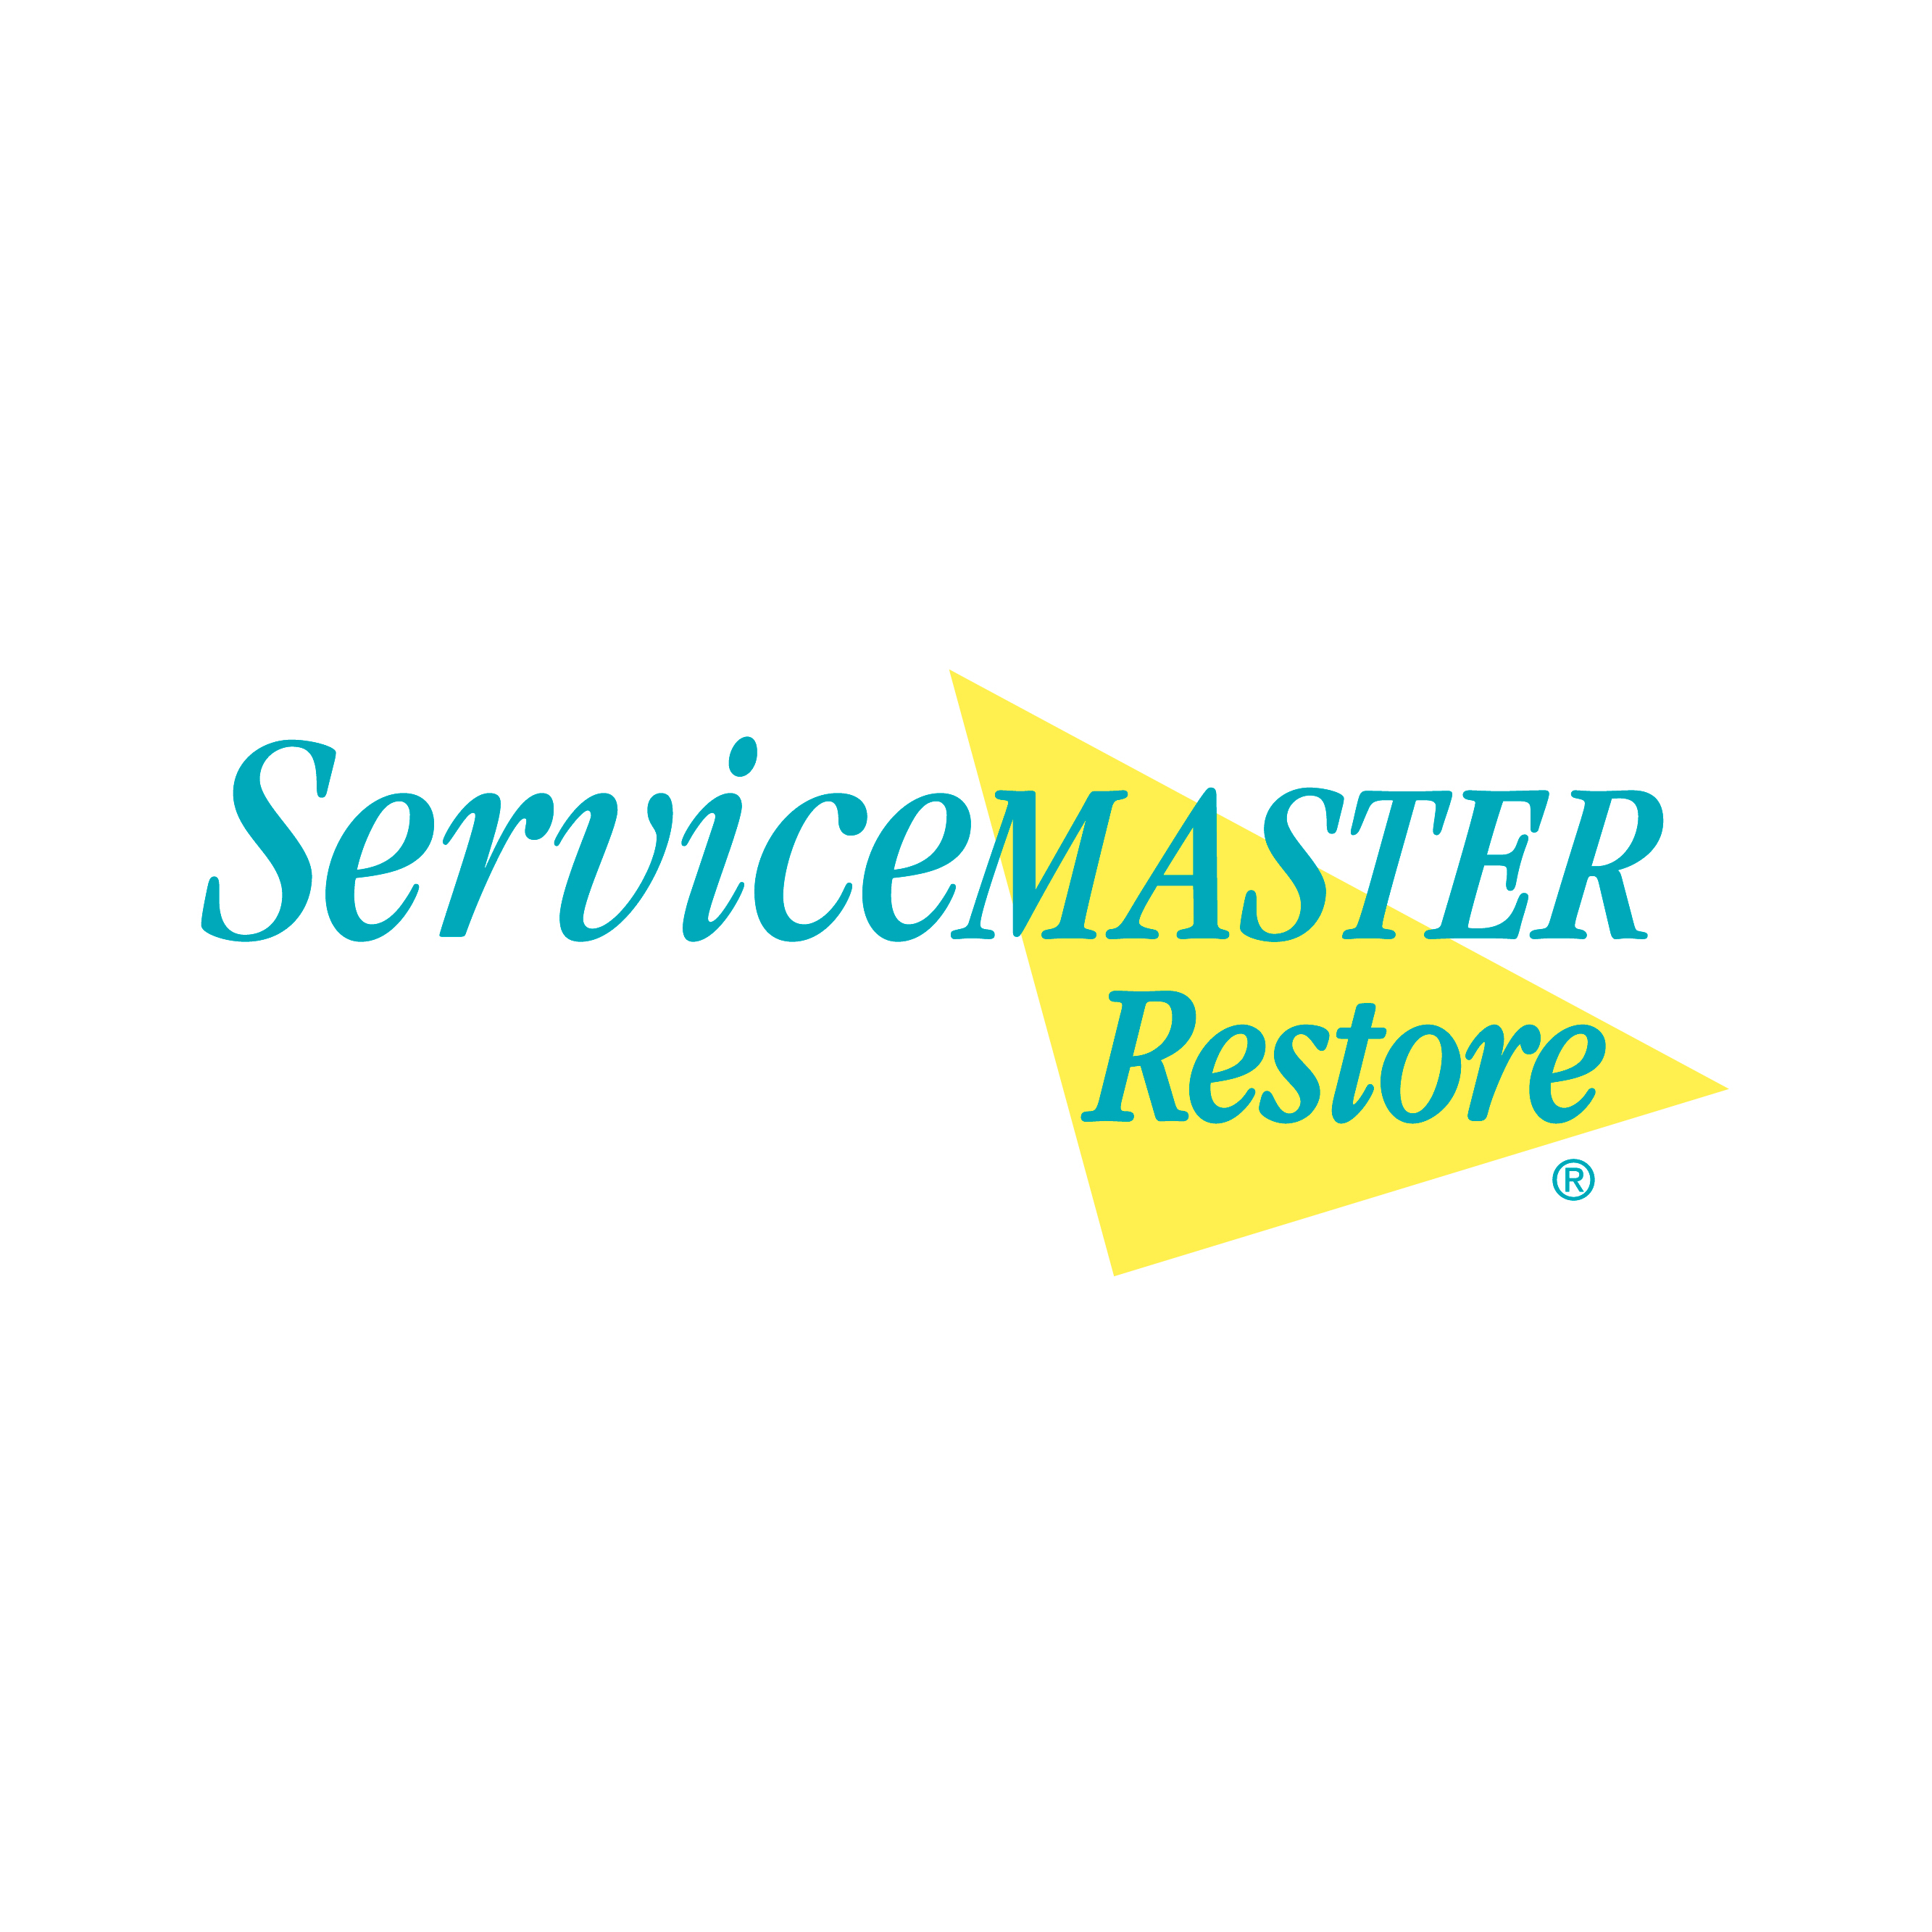 ServiceMaster Restoration By Simons - Chicago, IL 60654 - (773)376-1110 | ShowMeLocal.com